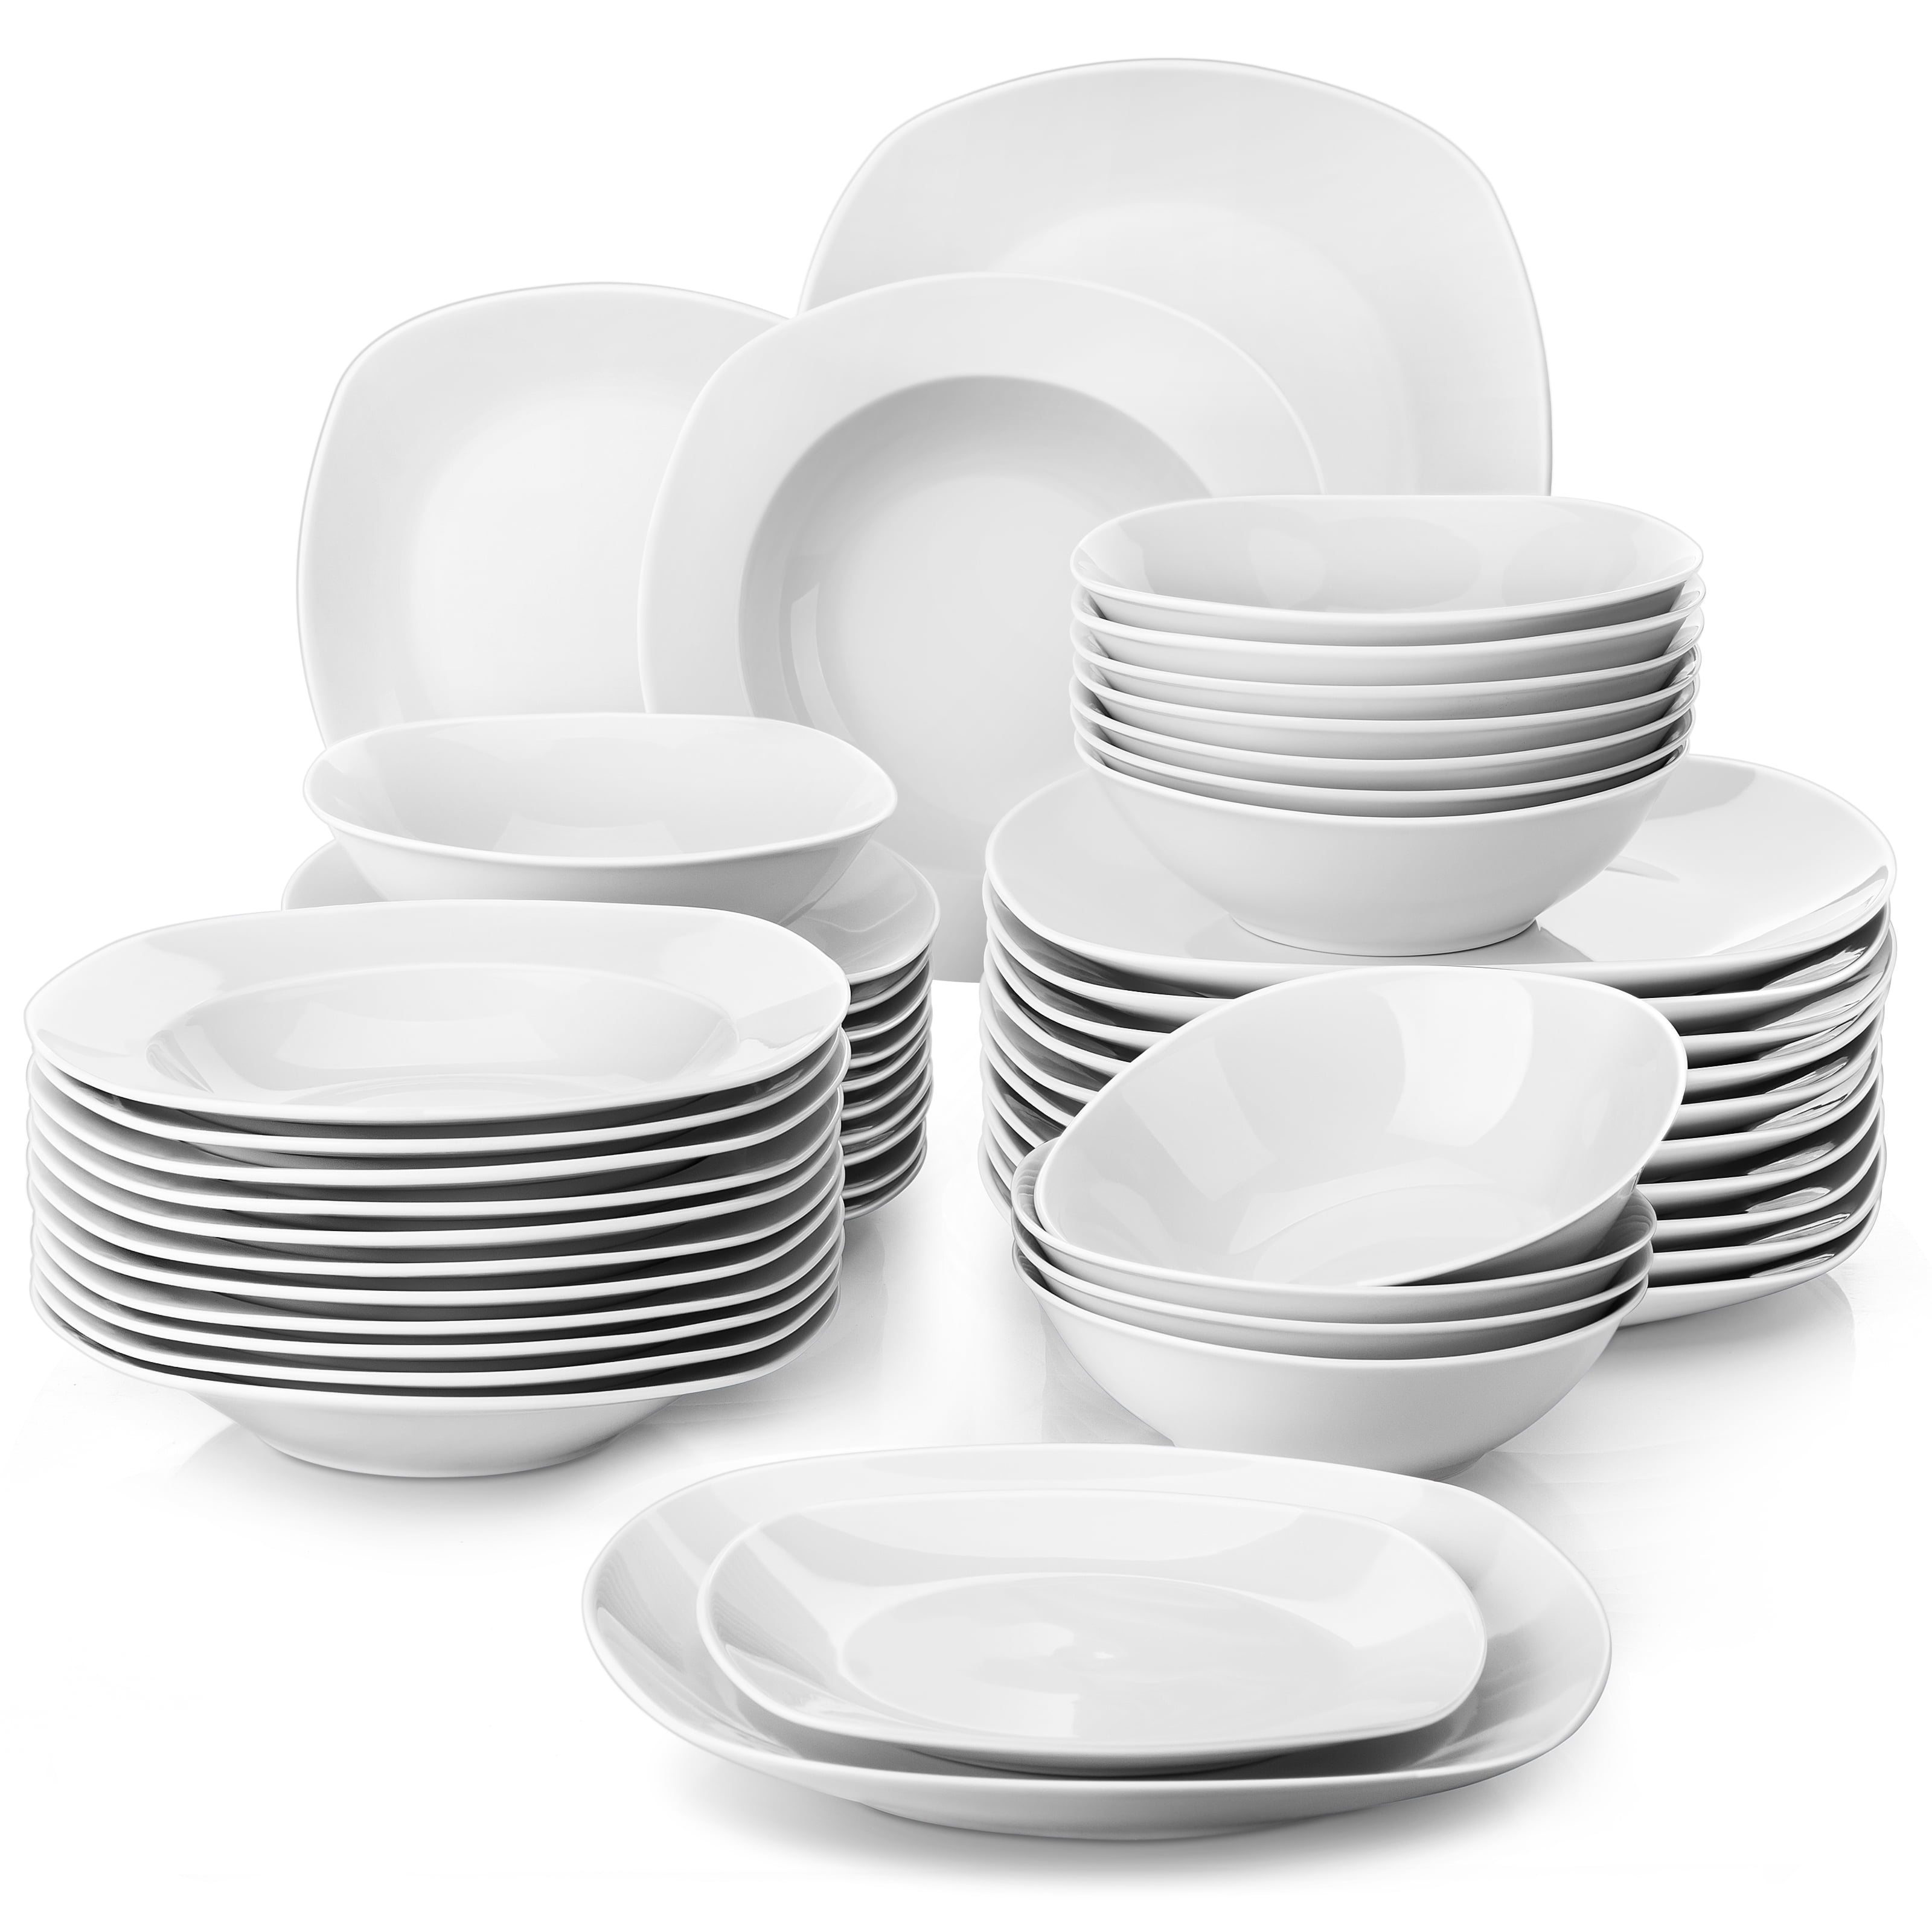 MALACASA 60-Piece Cream White Porcelain Dinner Combi-Set with 12 x Cups/Mugs/Saucers/Dessert Plates/Soup Plates and Dinner Plates Dinnerware Service for 12 People Series Blance 